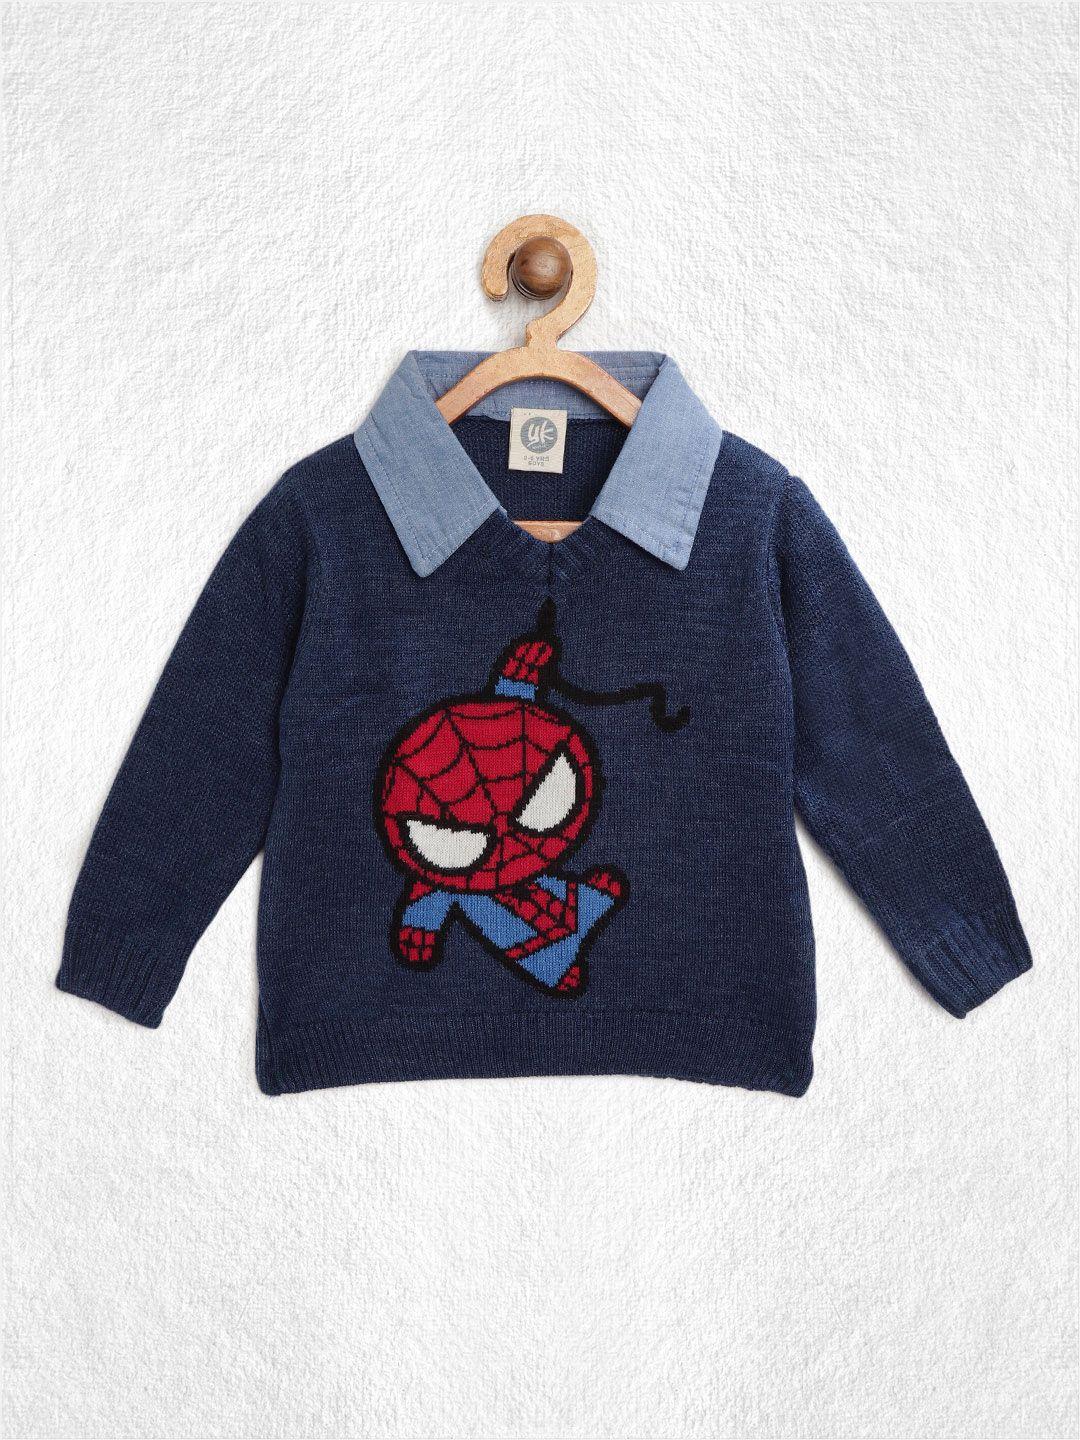 yk-marvel-boys-navy-blue-&-red-spiderman-self-design-pullover